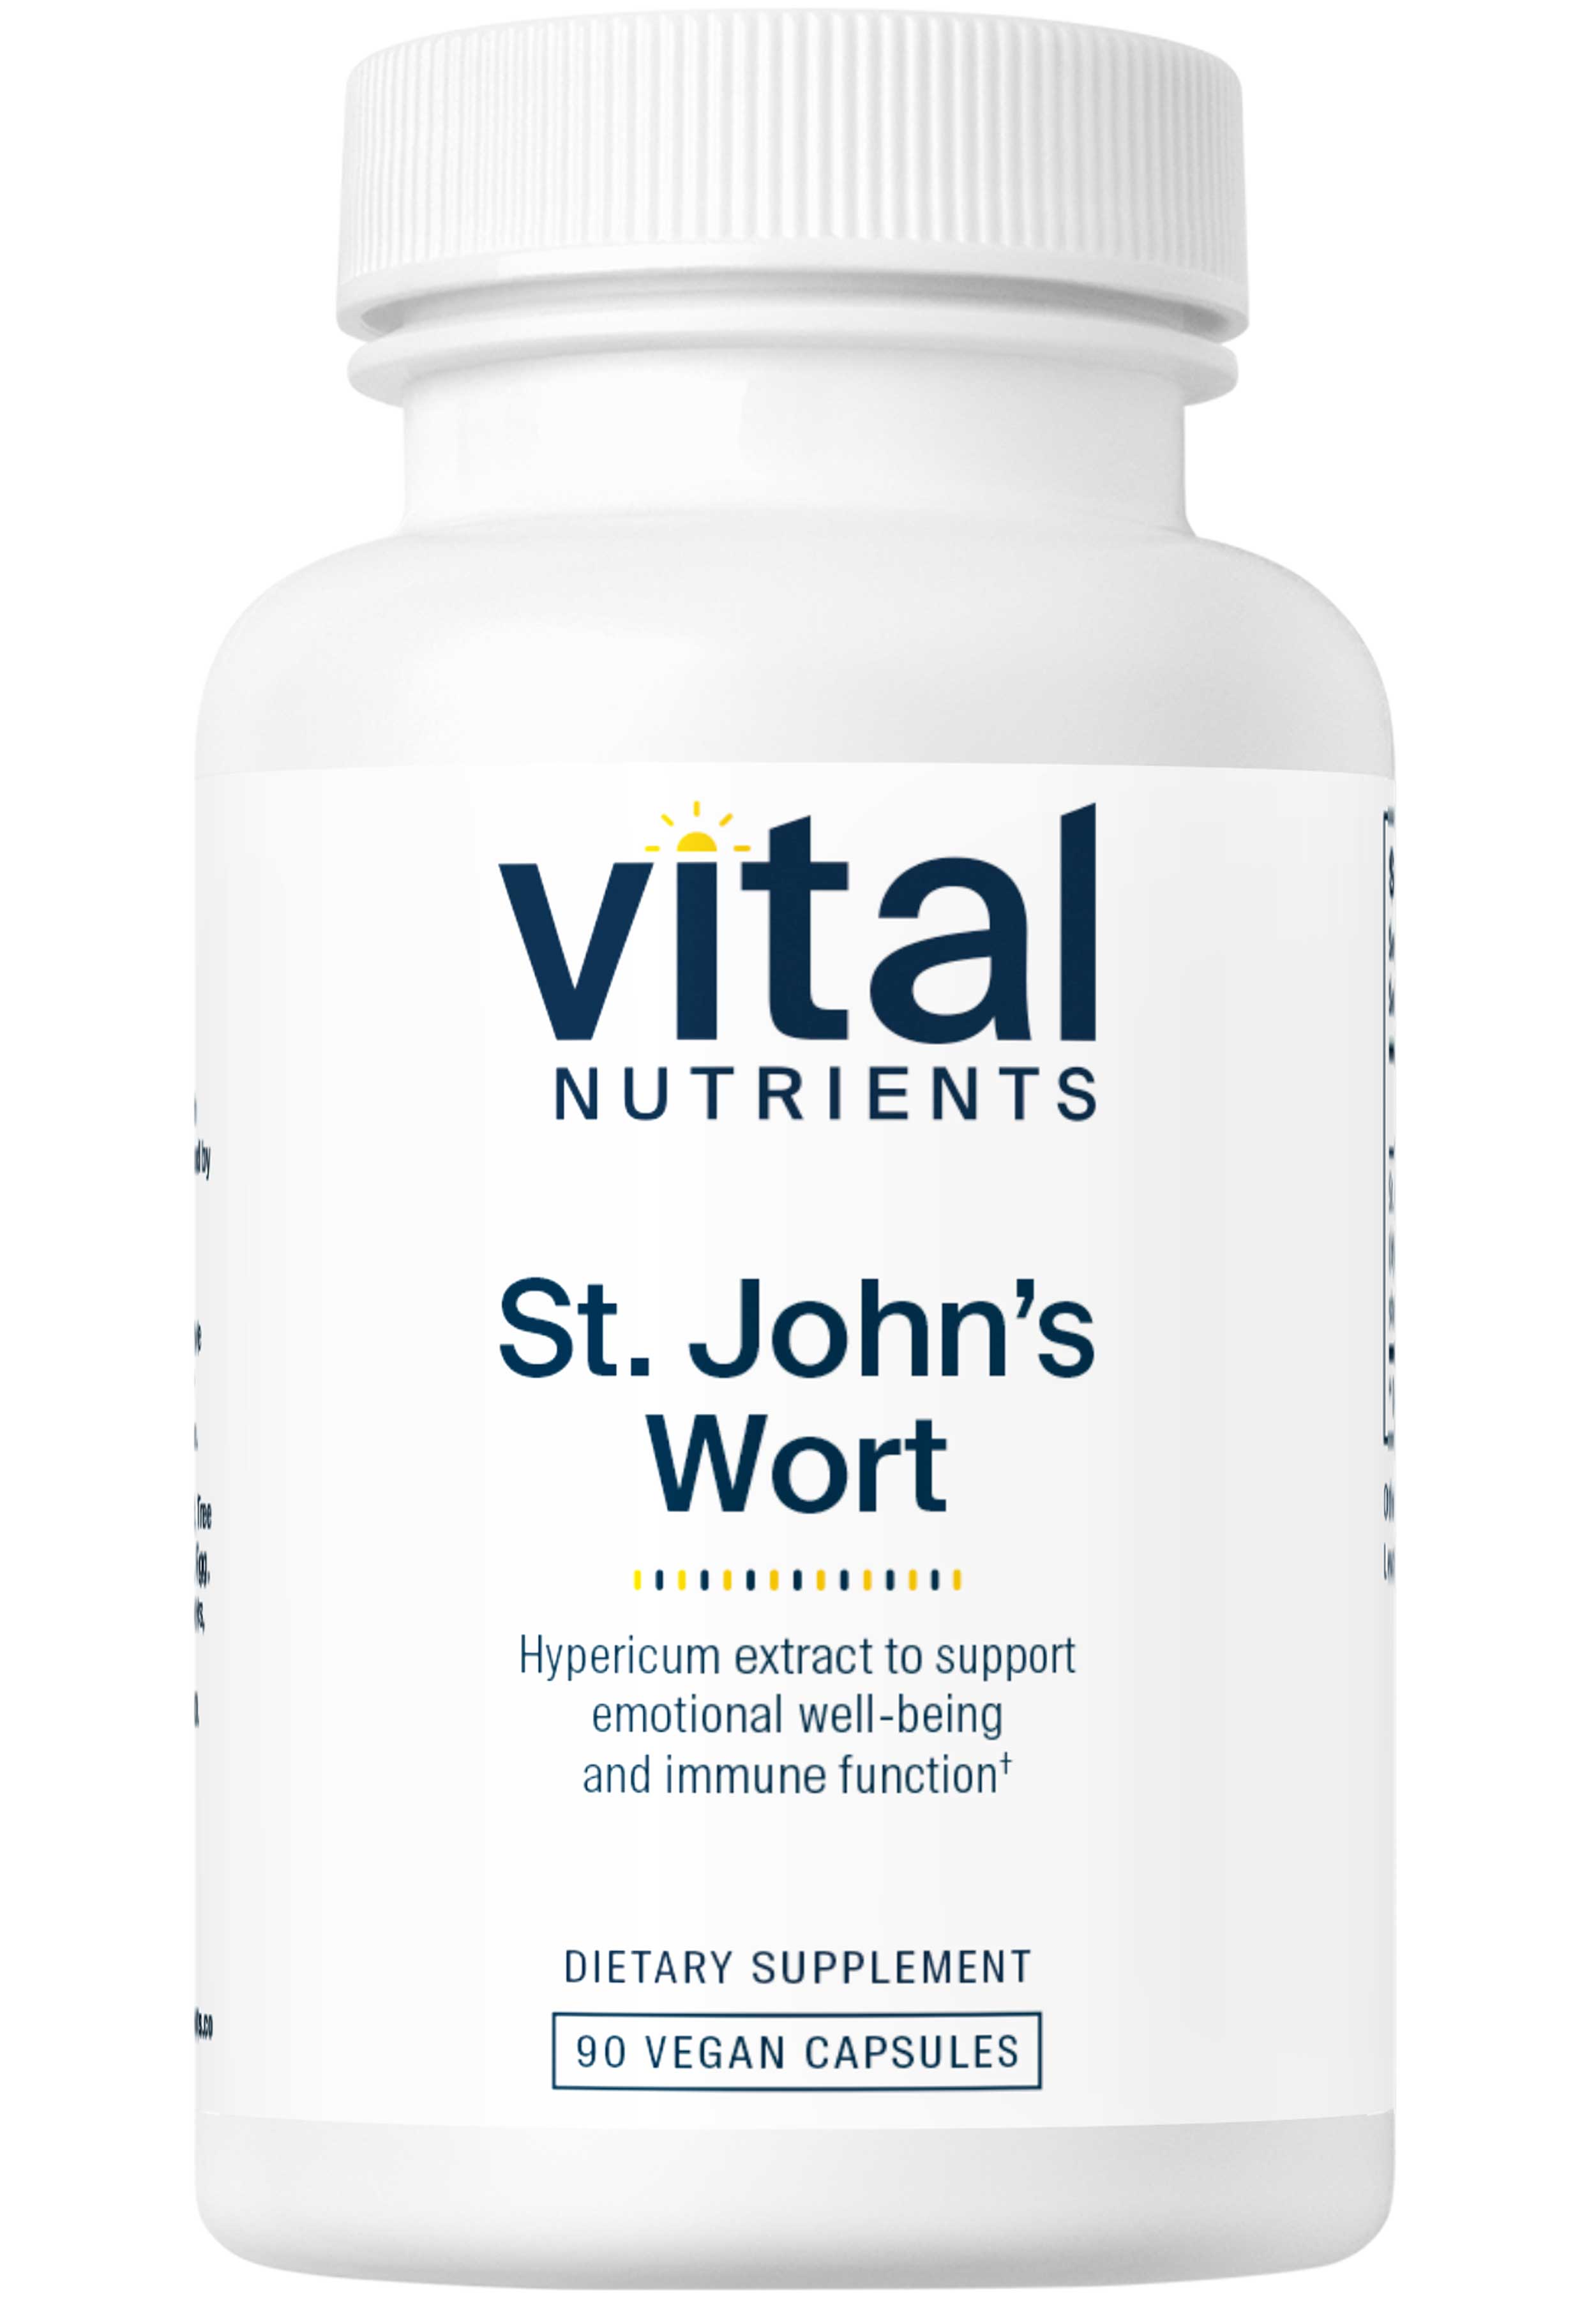 Vital Nutrients St. John's Wort